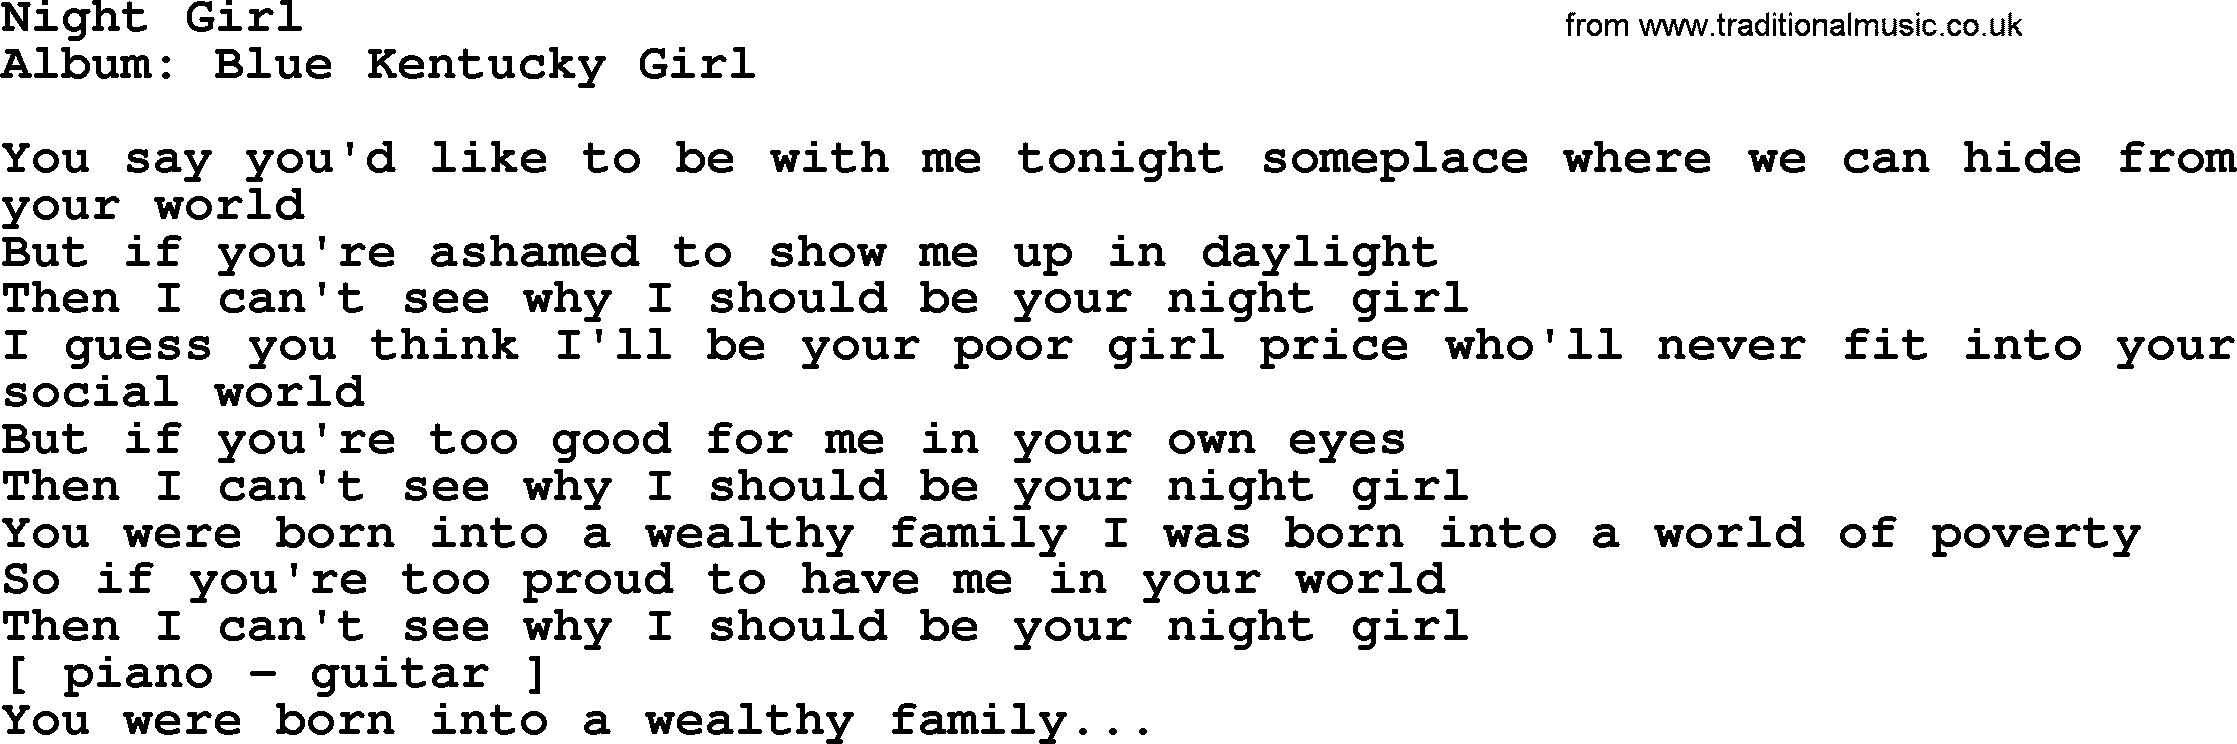 Loretta Lynn song: Night Girl lyrics